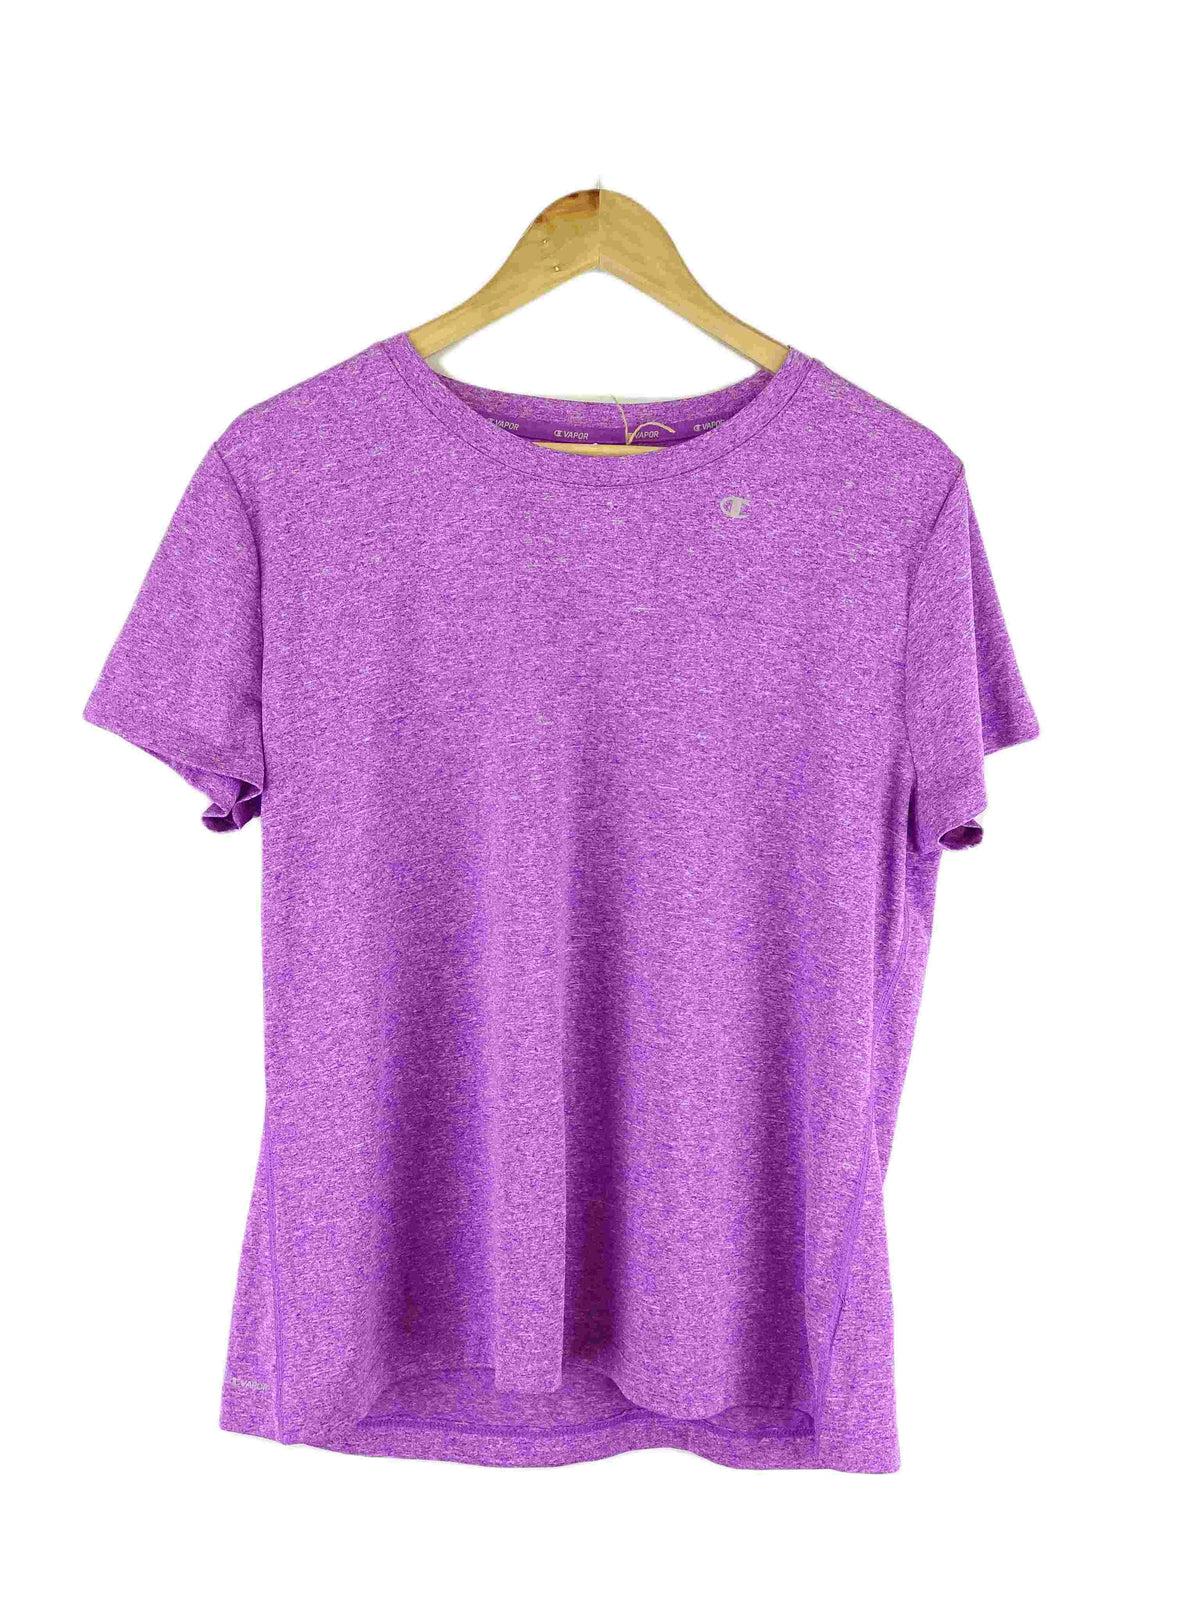 Champion Purple T-shirt XL